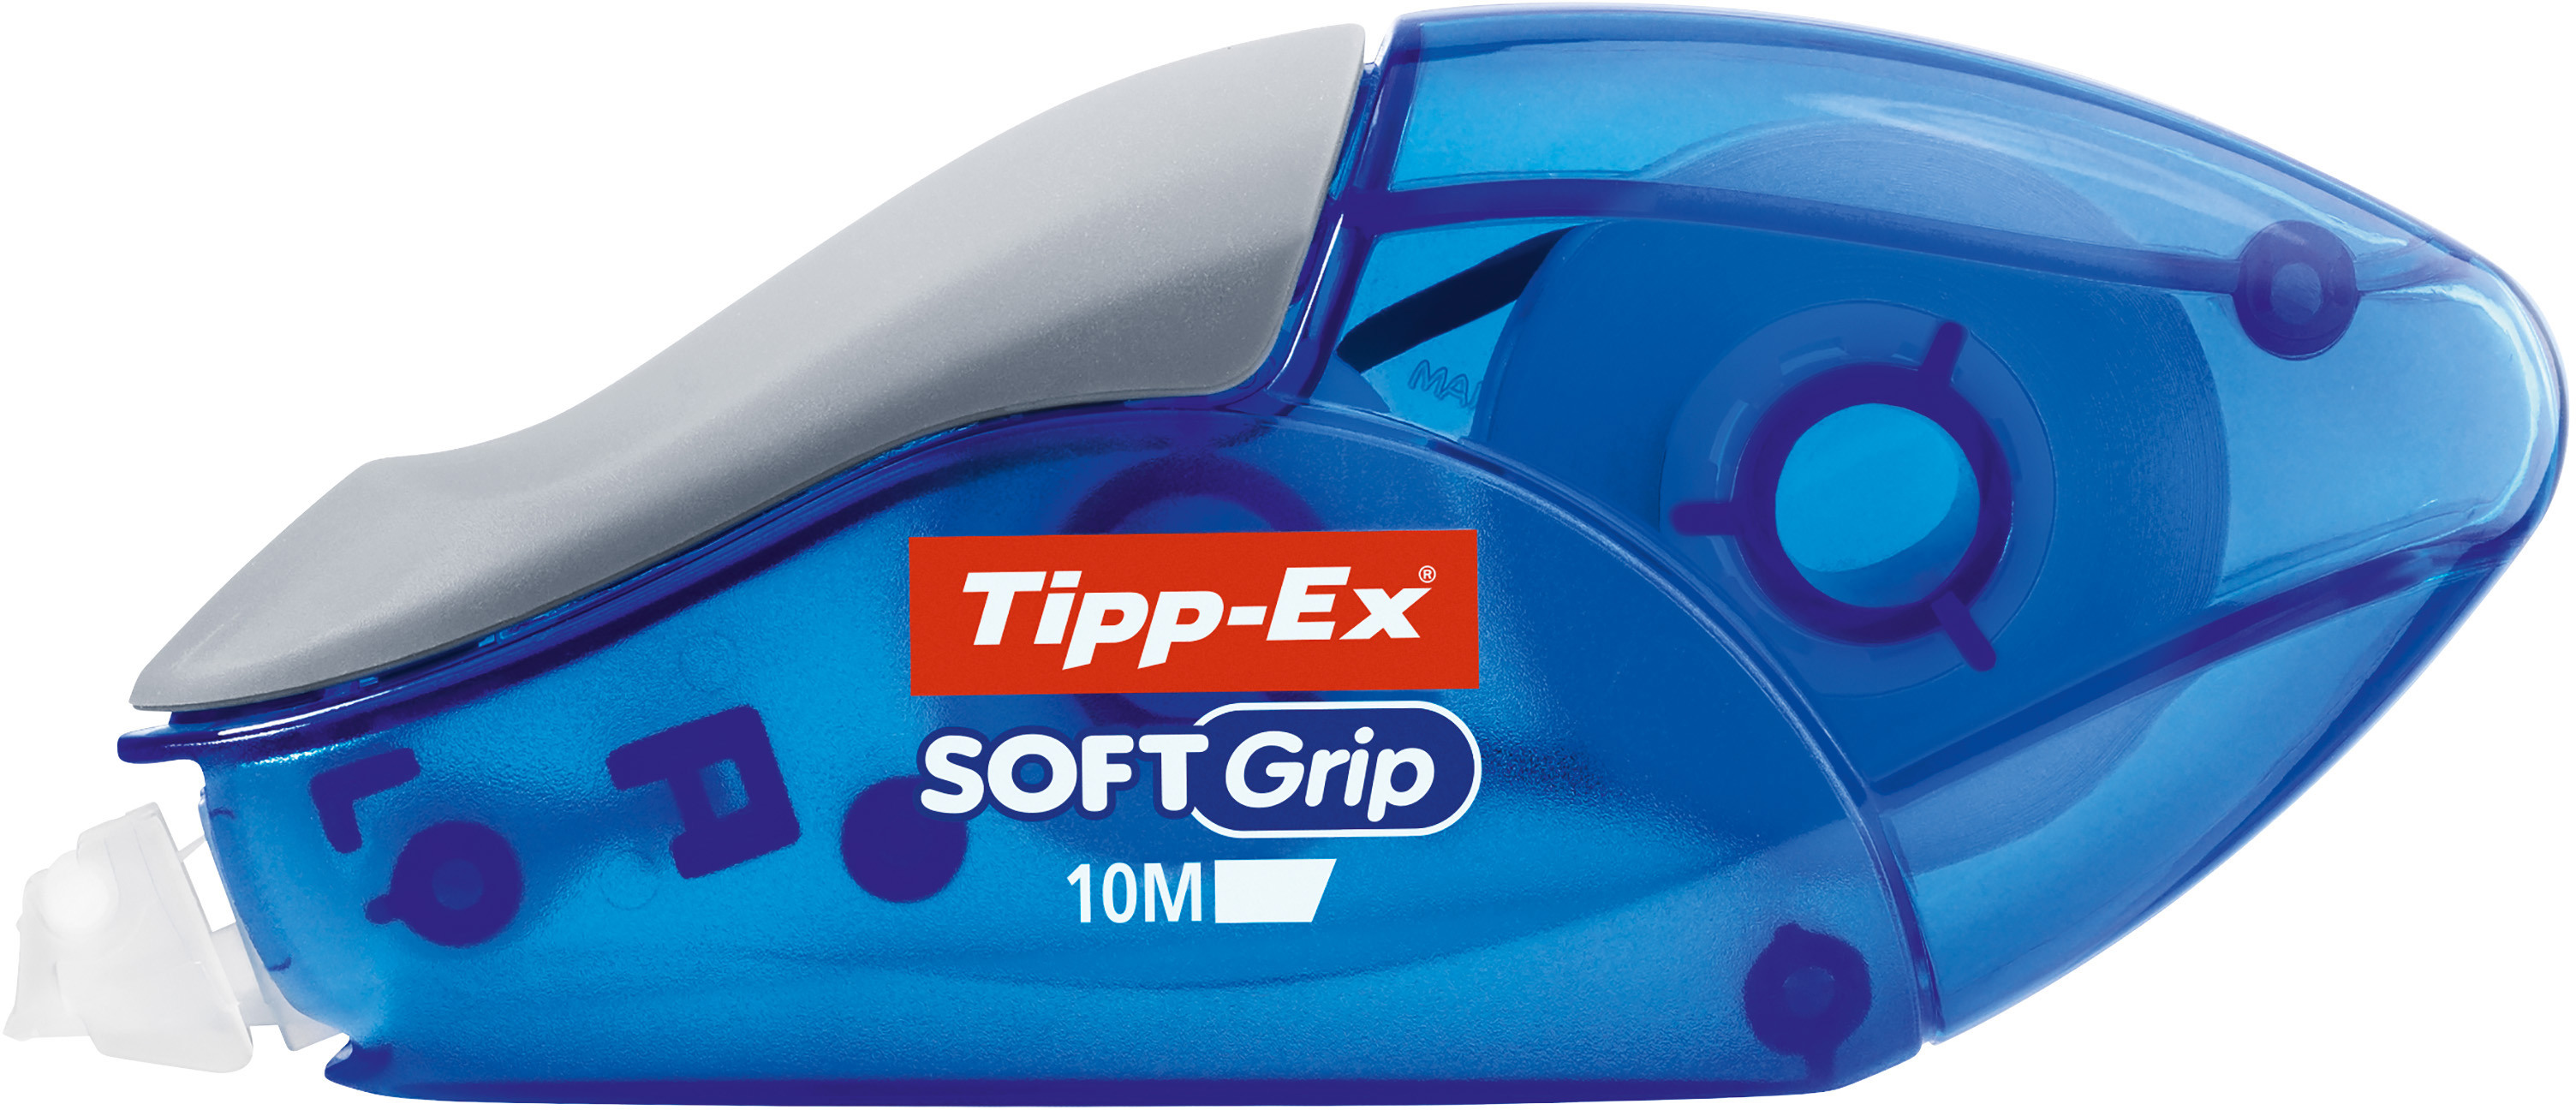 TIPP-EX Roller de correction 4.2mmx10m 900338 Soft Grip